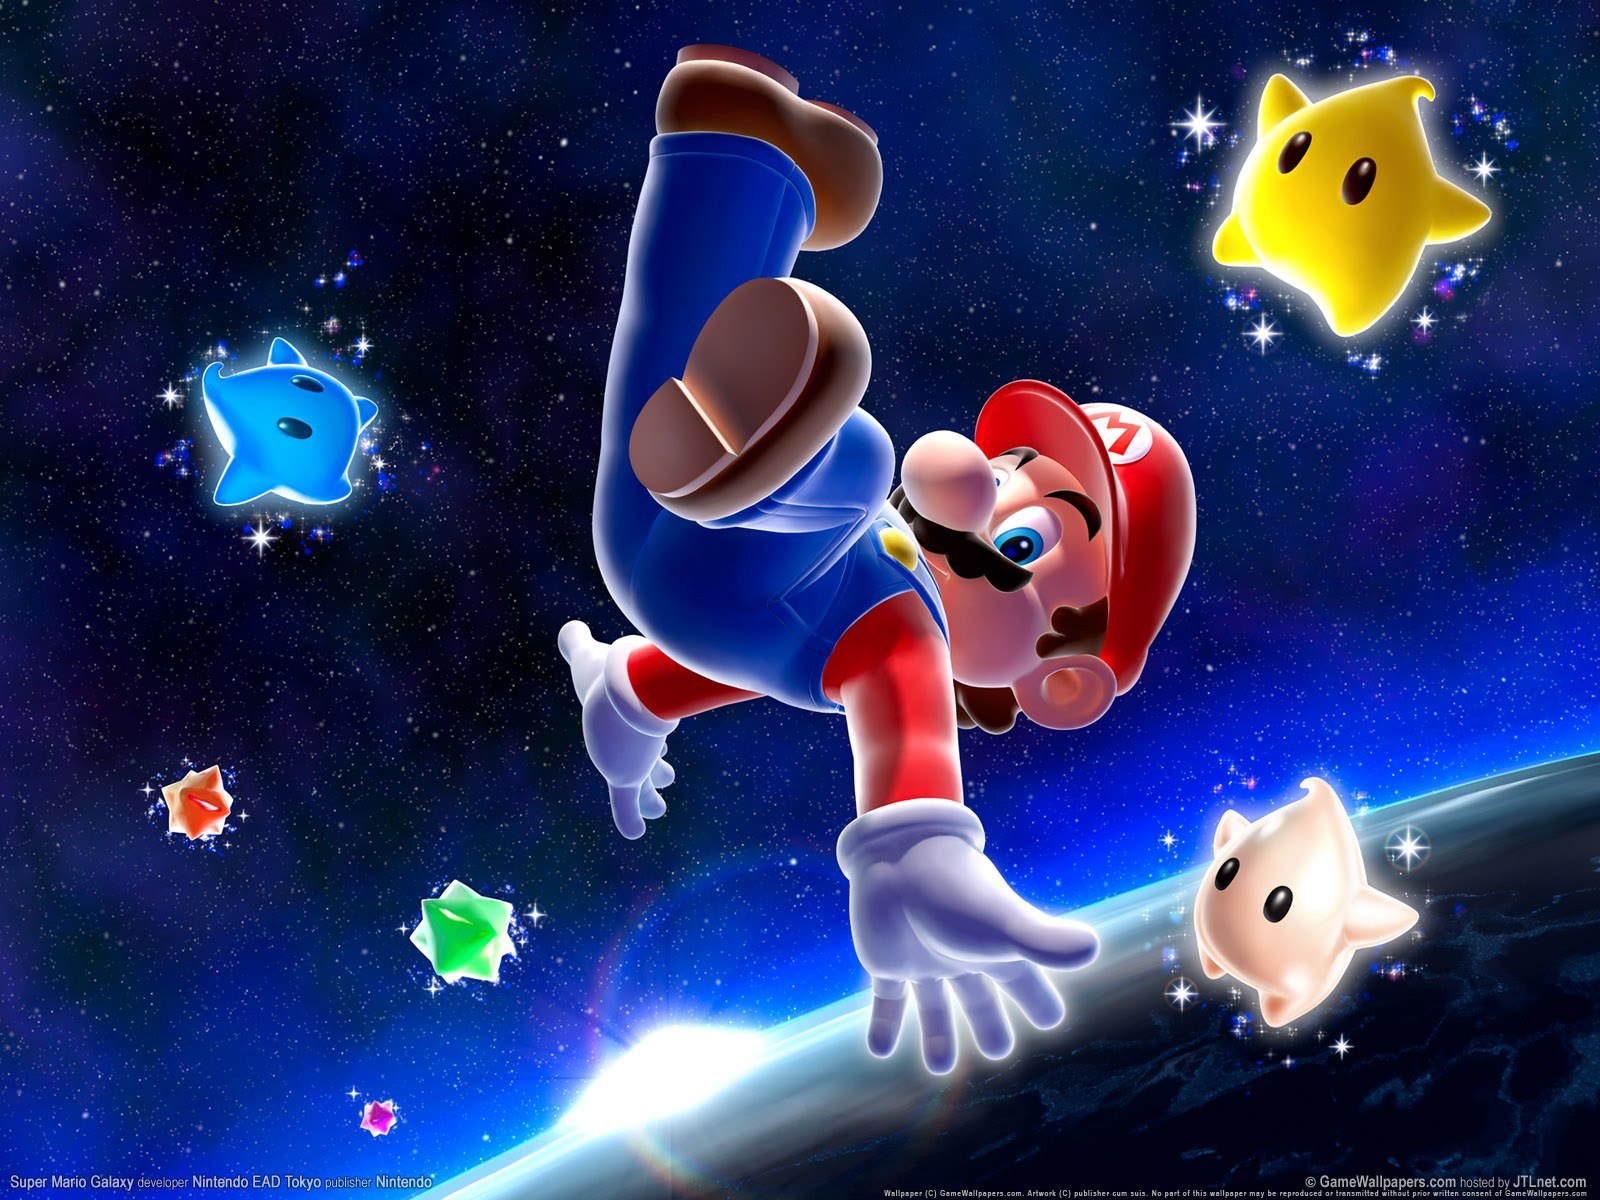 Mario 3D per Wii U in uscita ad ottobre?